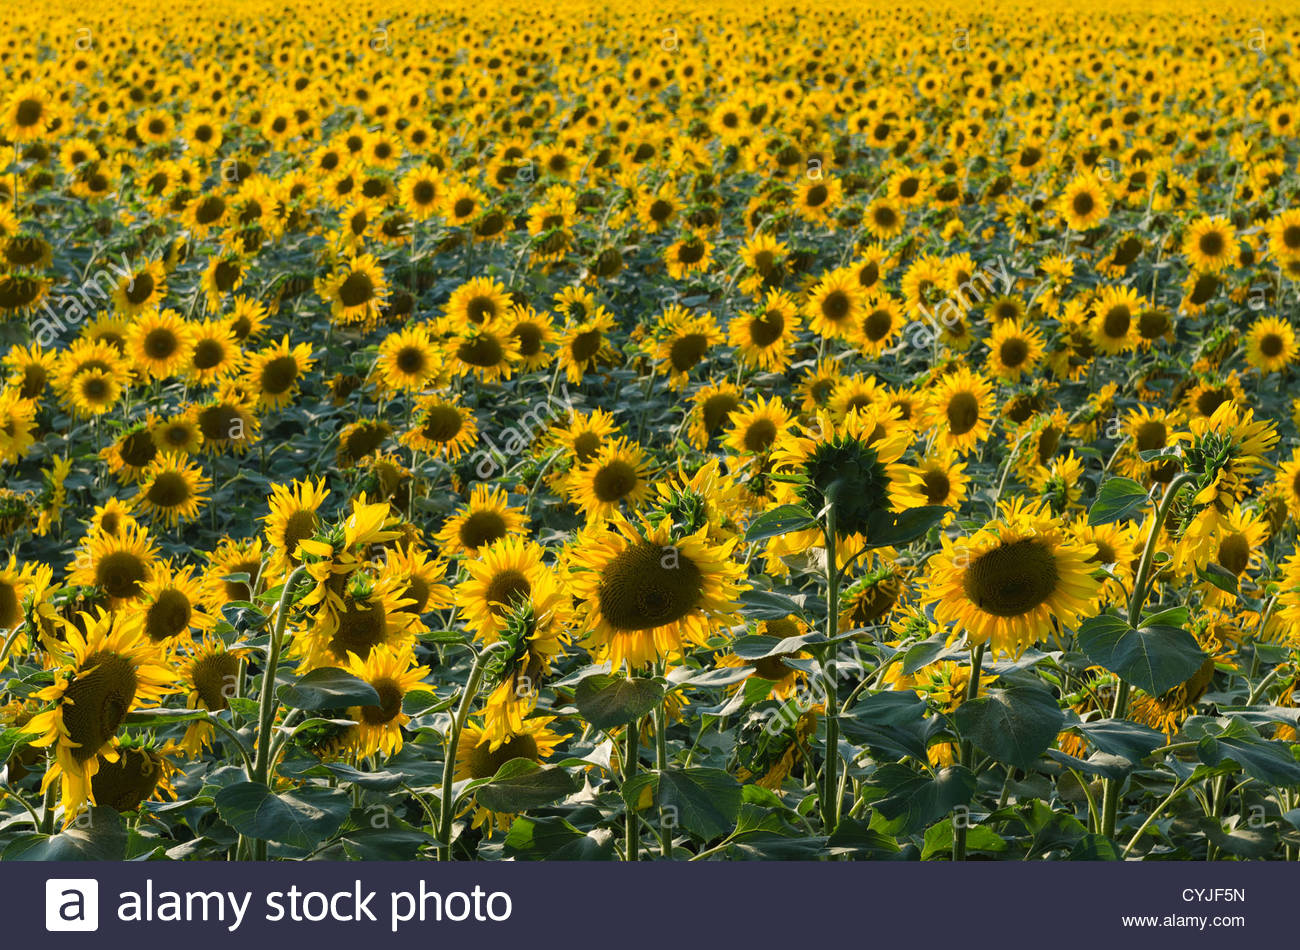 Sunflower Meal — China & Ukraine